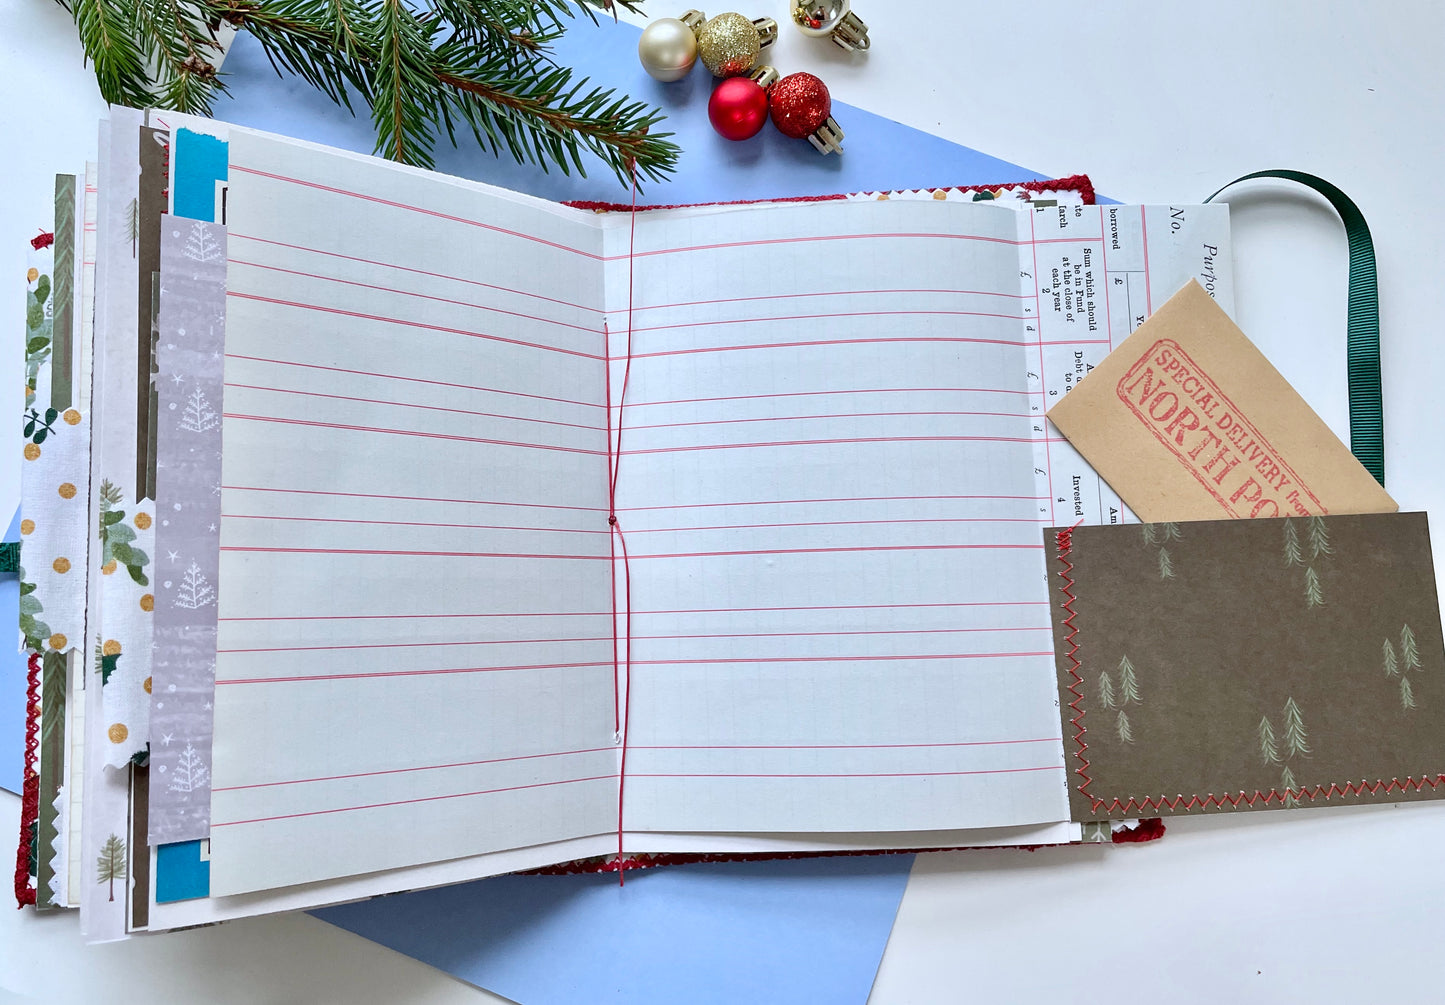 Mickey's Christmas Fabric Cover Handmade Journal